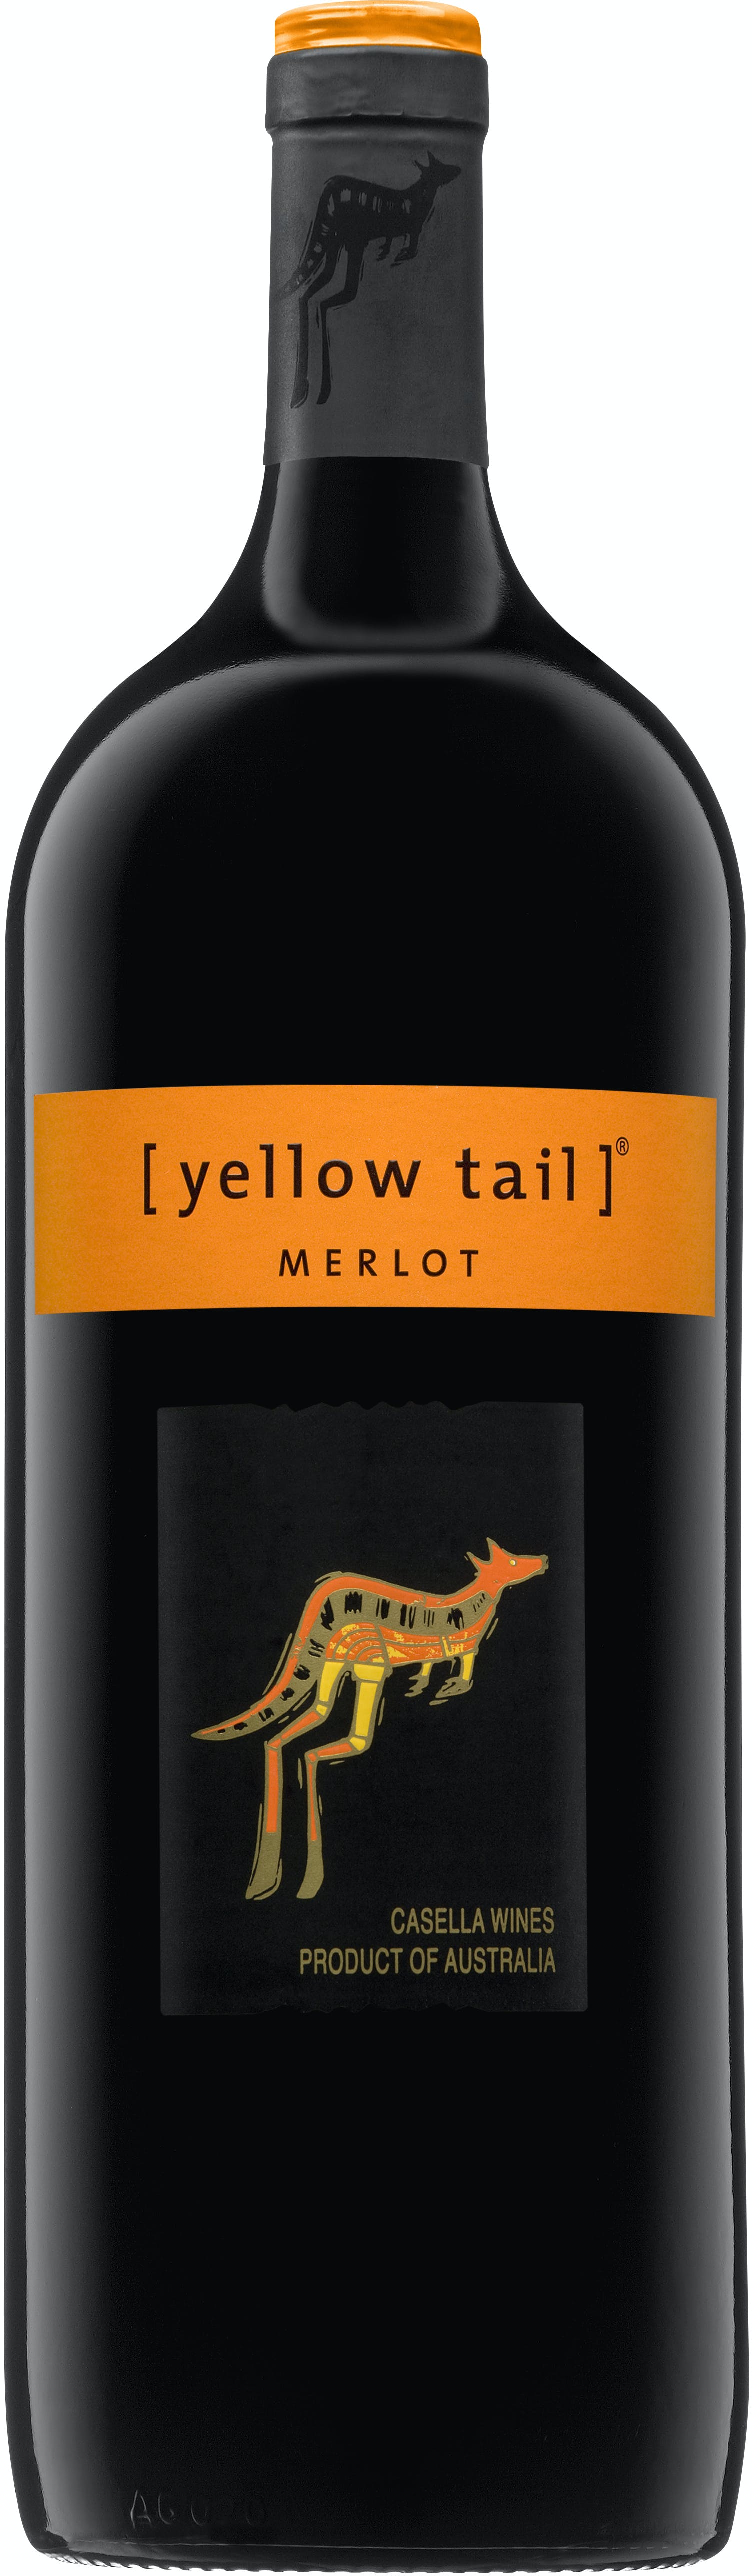 images/wine/Red Wine/Yellow Tail Merlot 1.5L.jpg